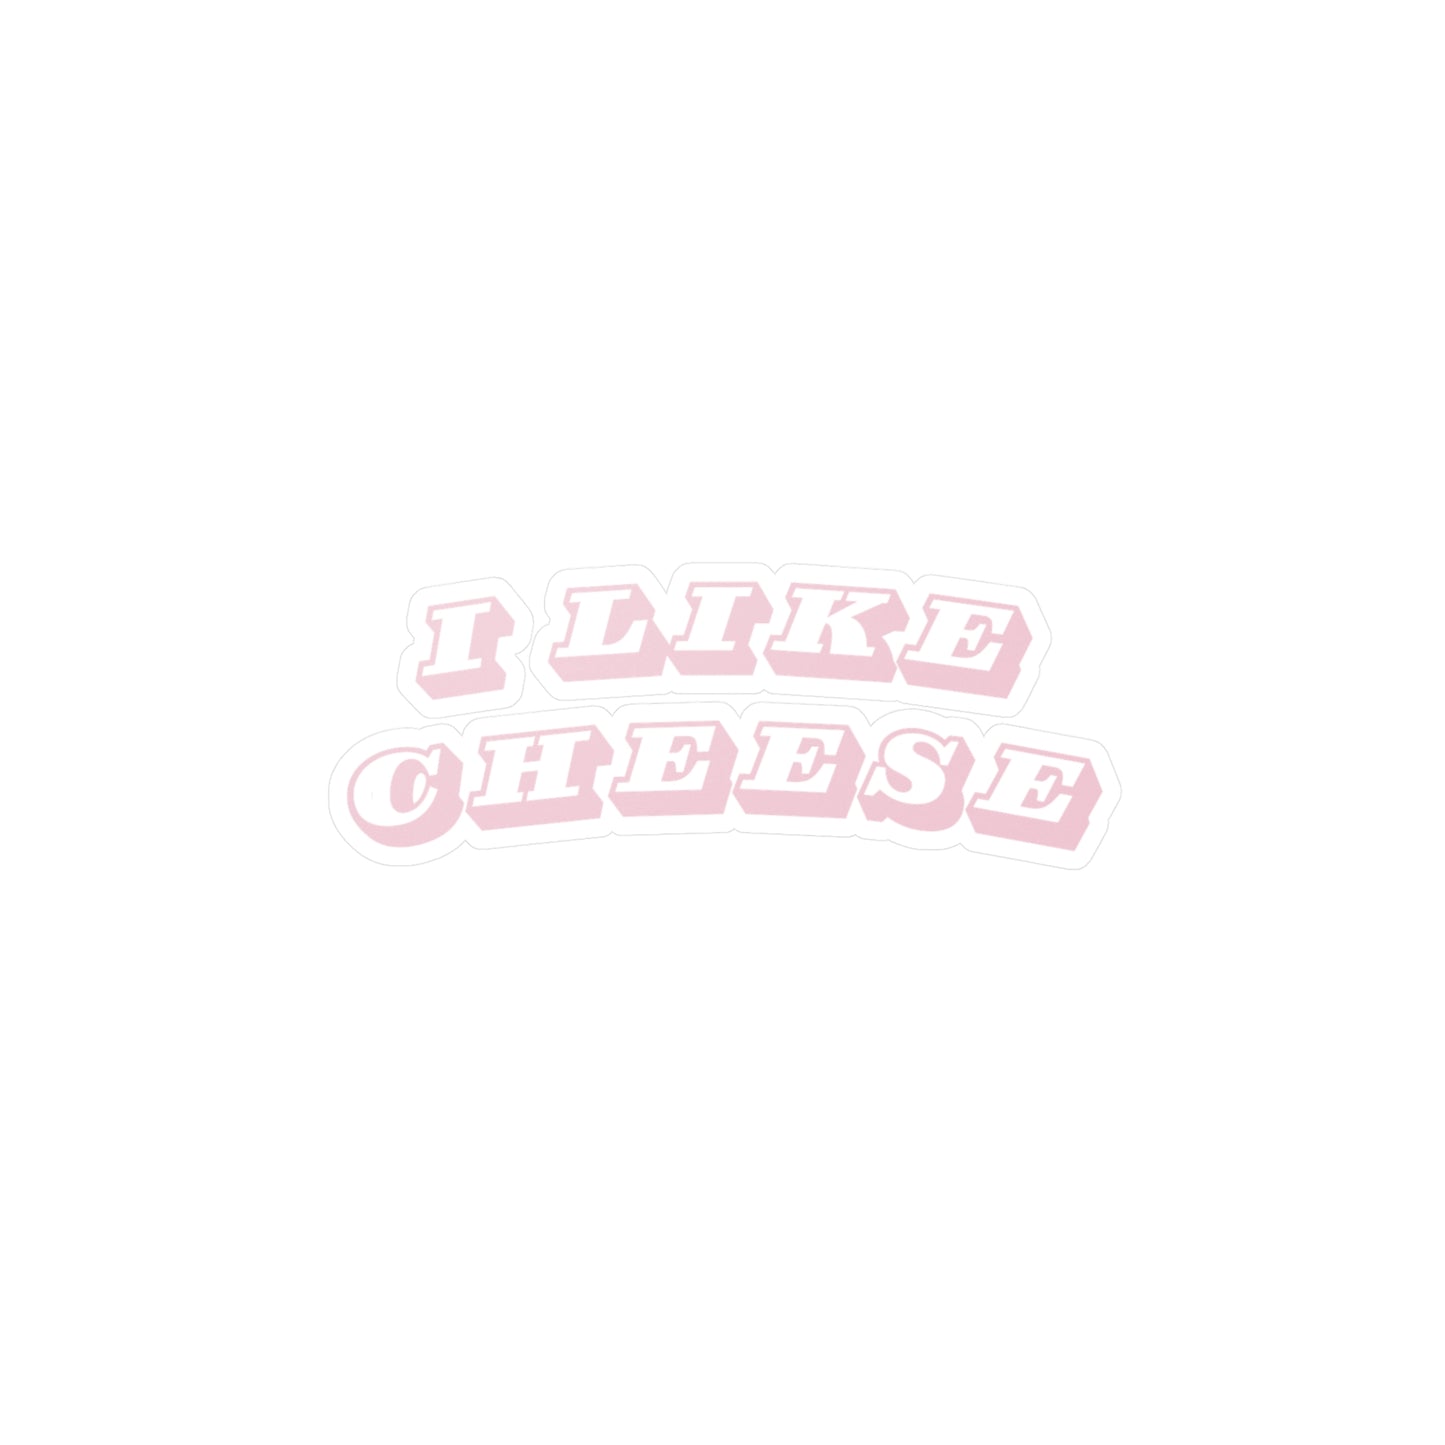 'I like cheese' Vinyl Sticker